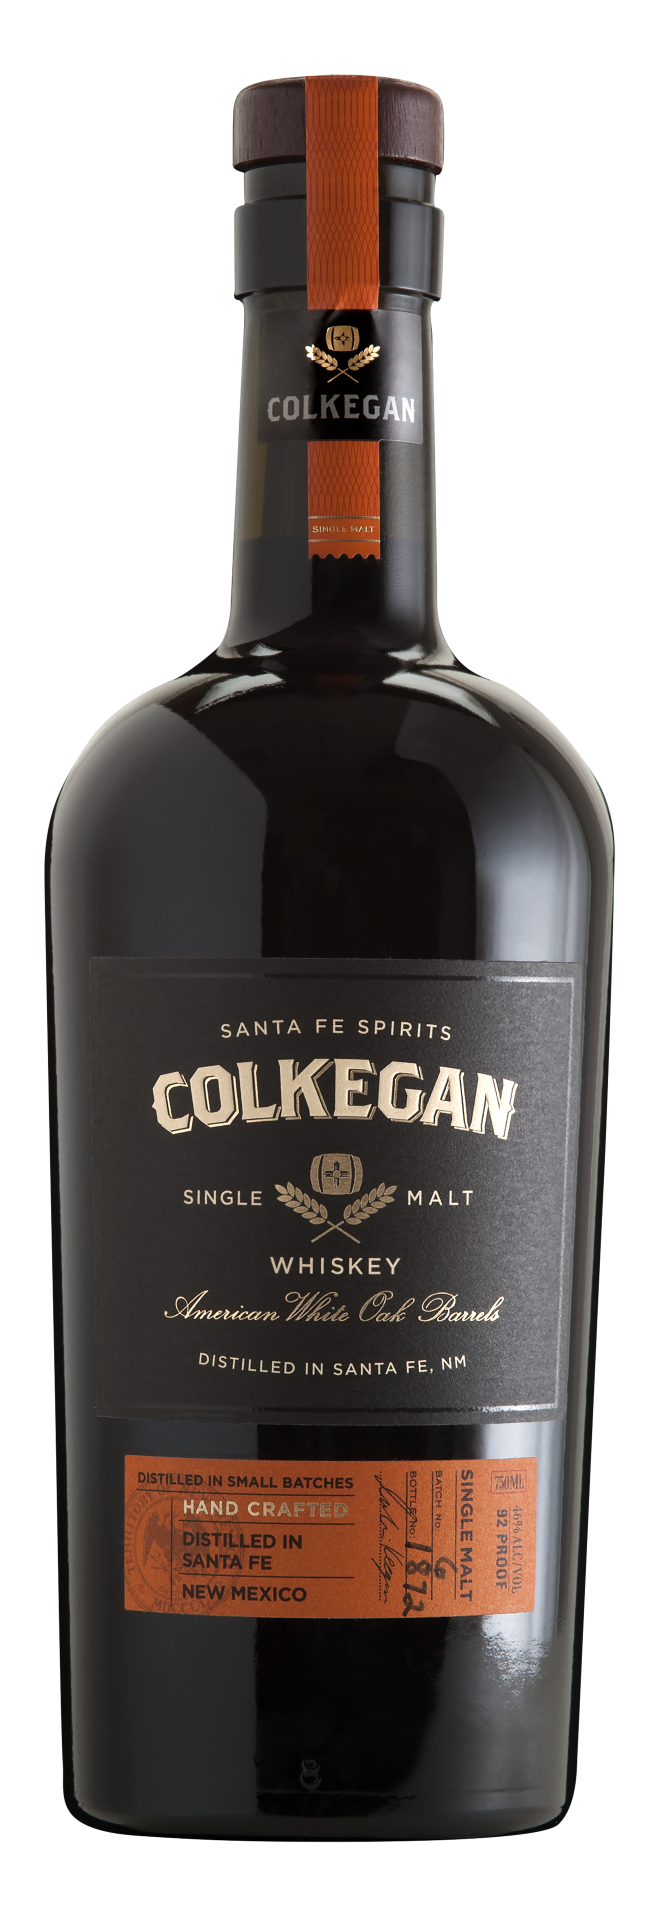 Santa Fe Spirits Colkegan Single Malt Whisky